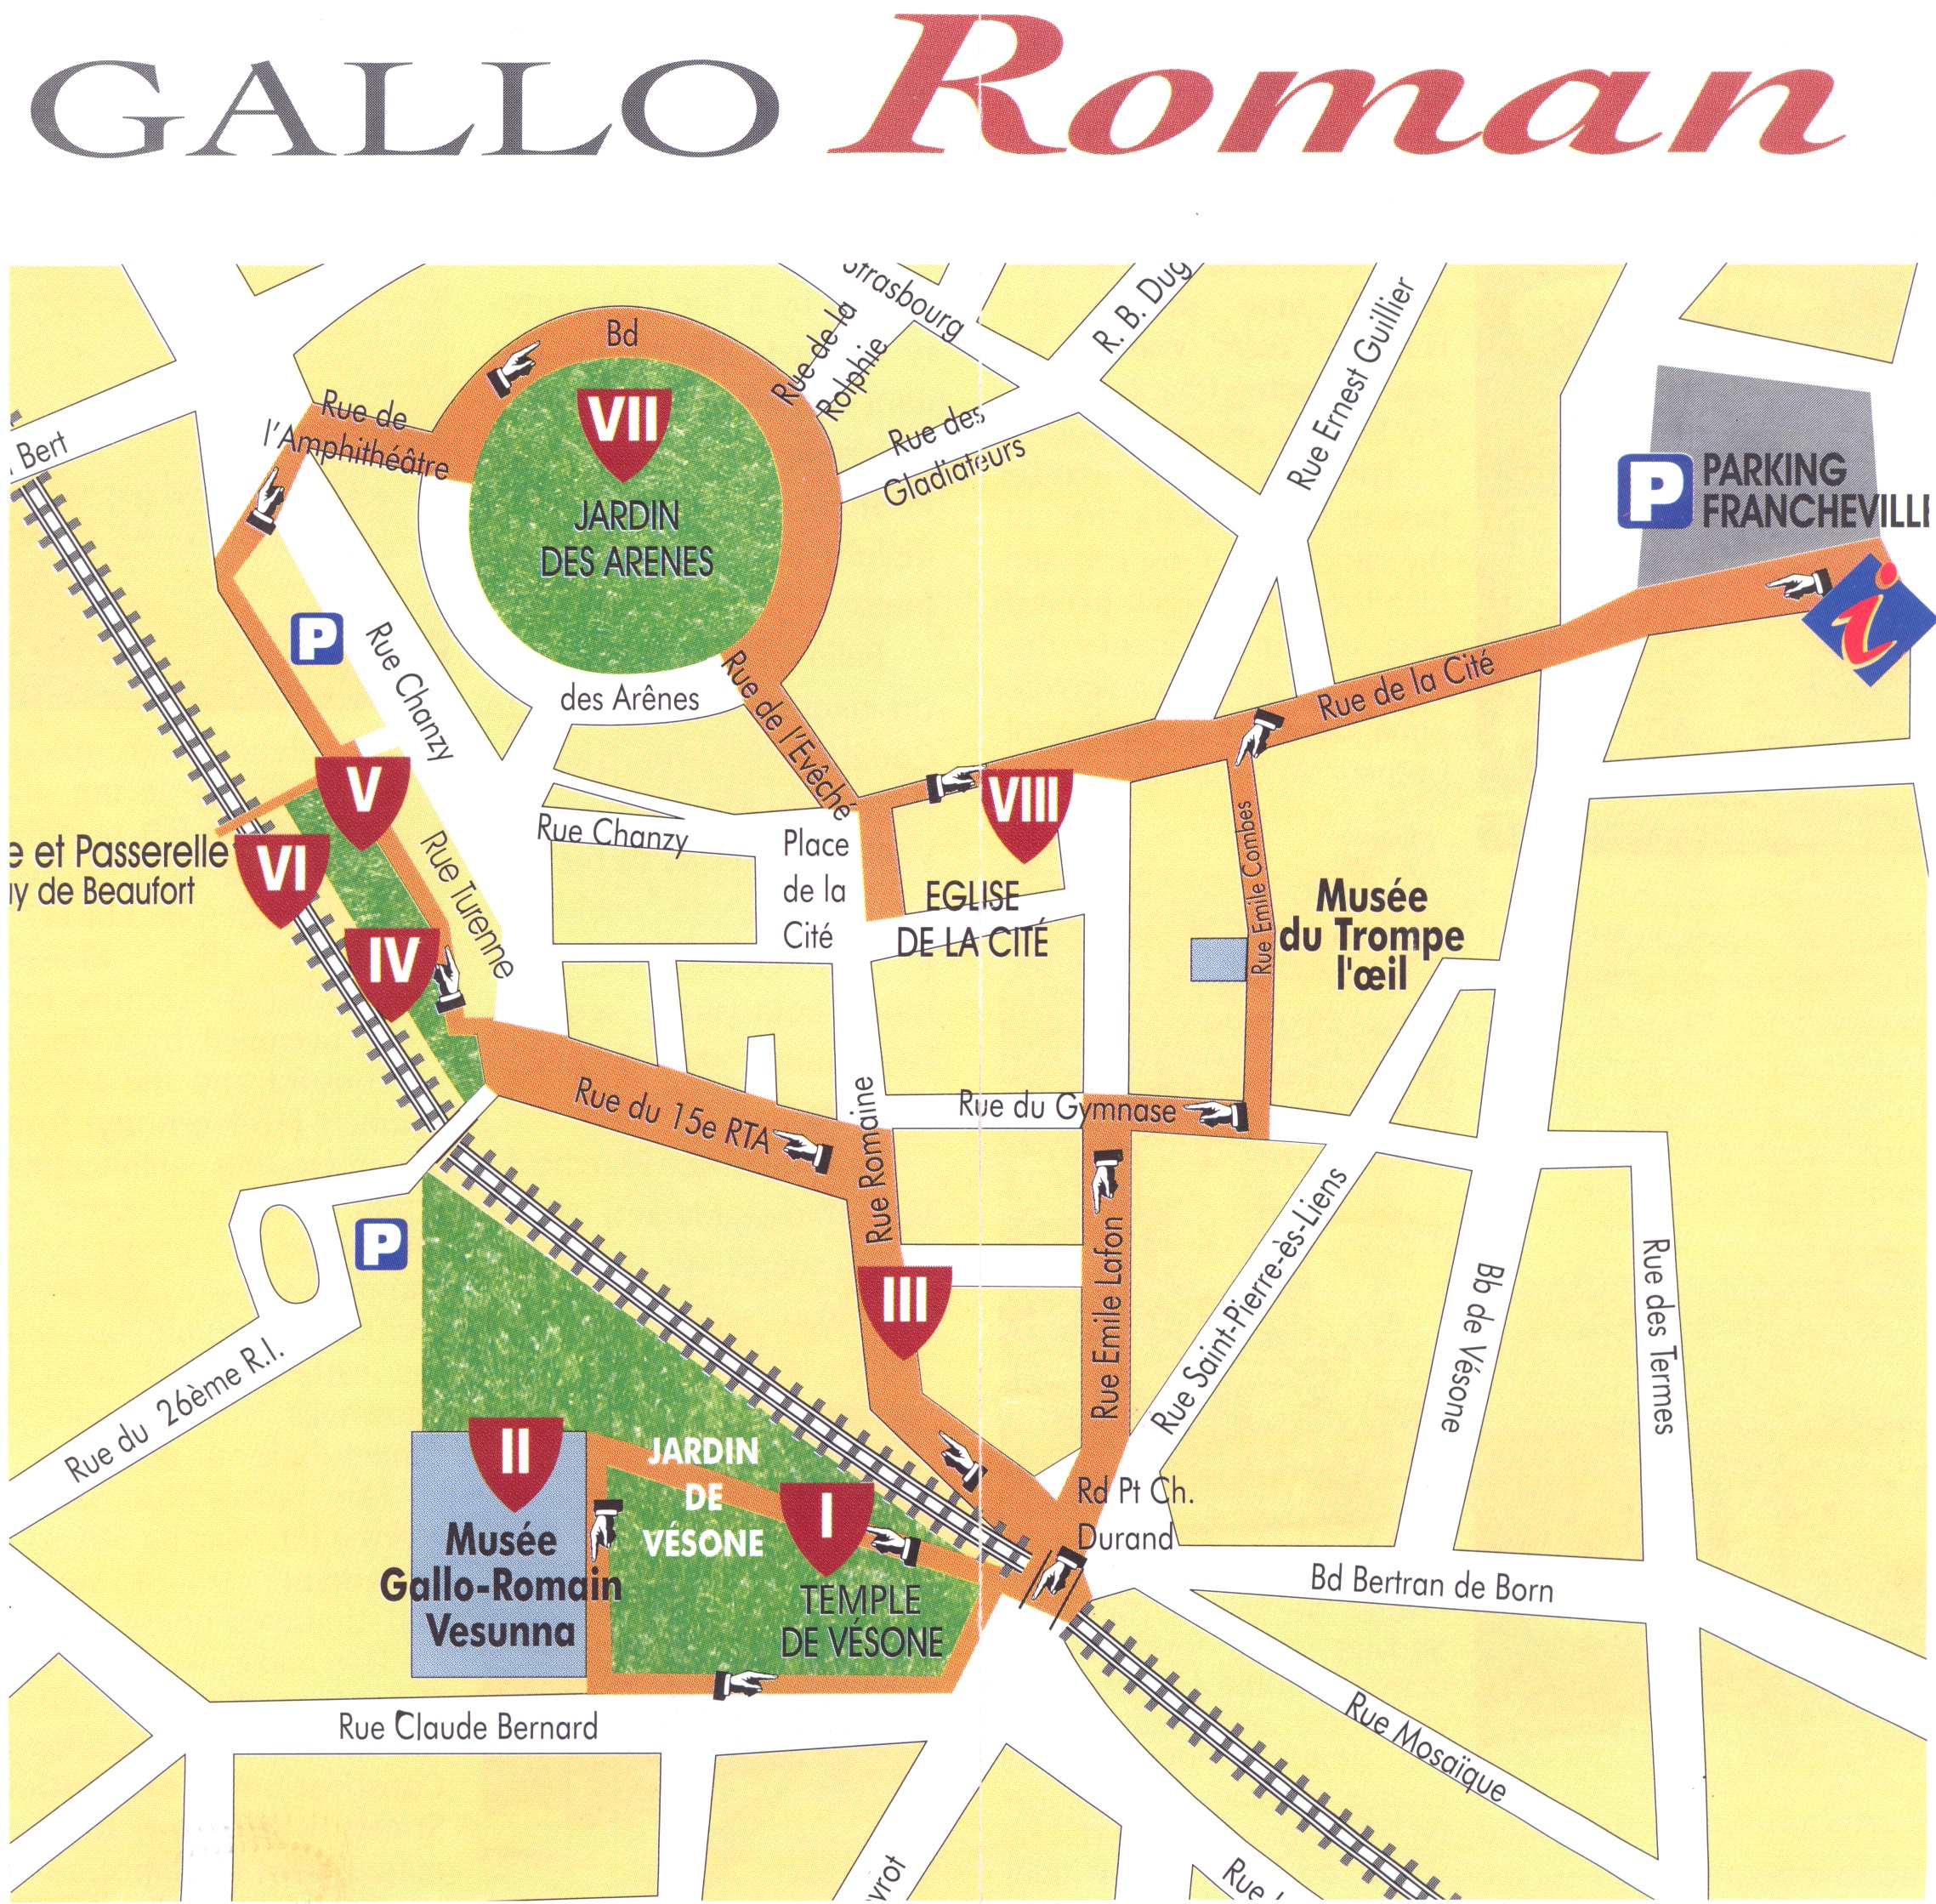 Галло-римские памятники Периге на карте